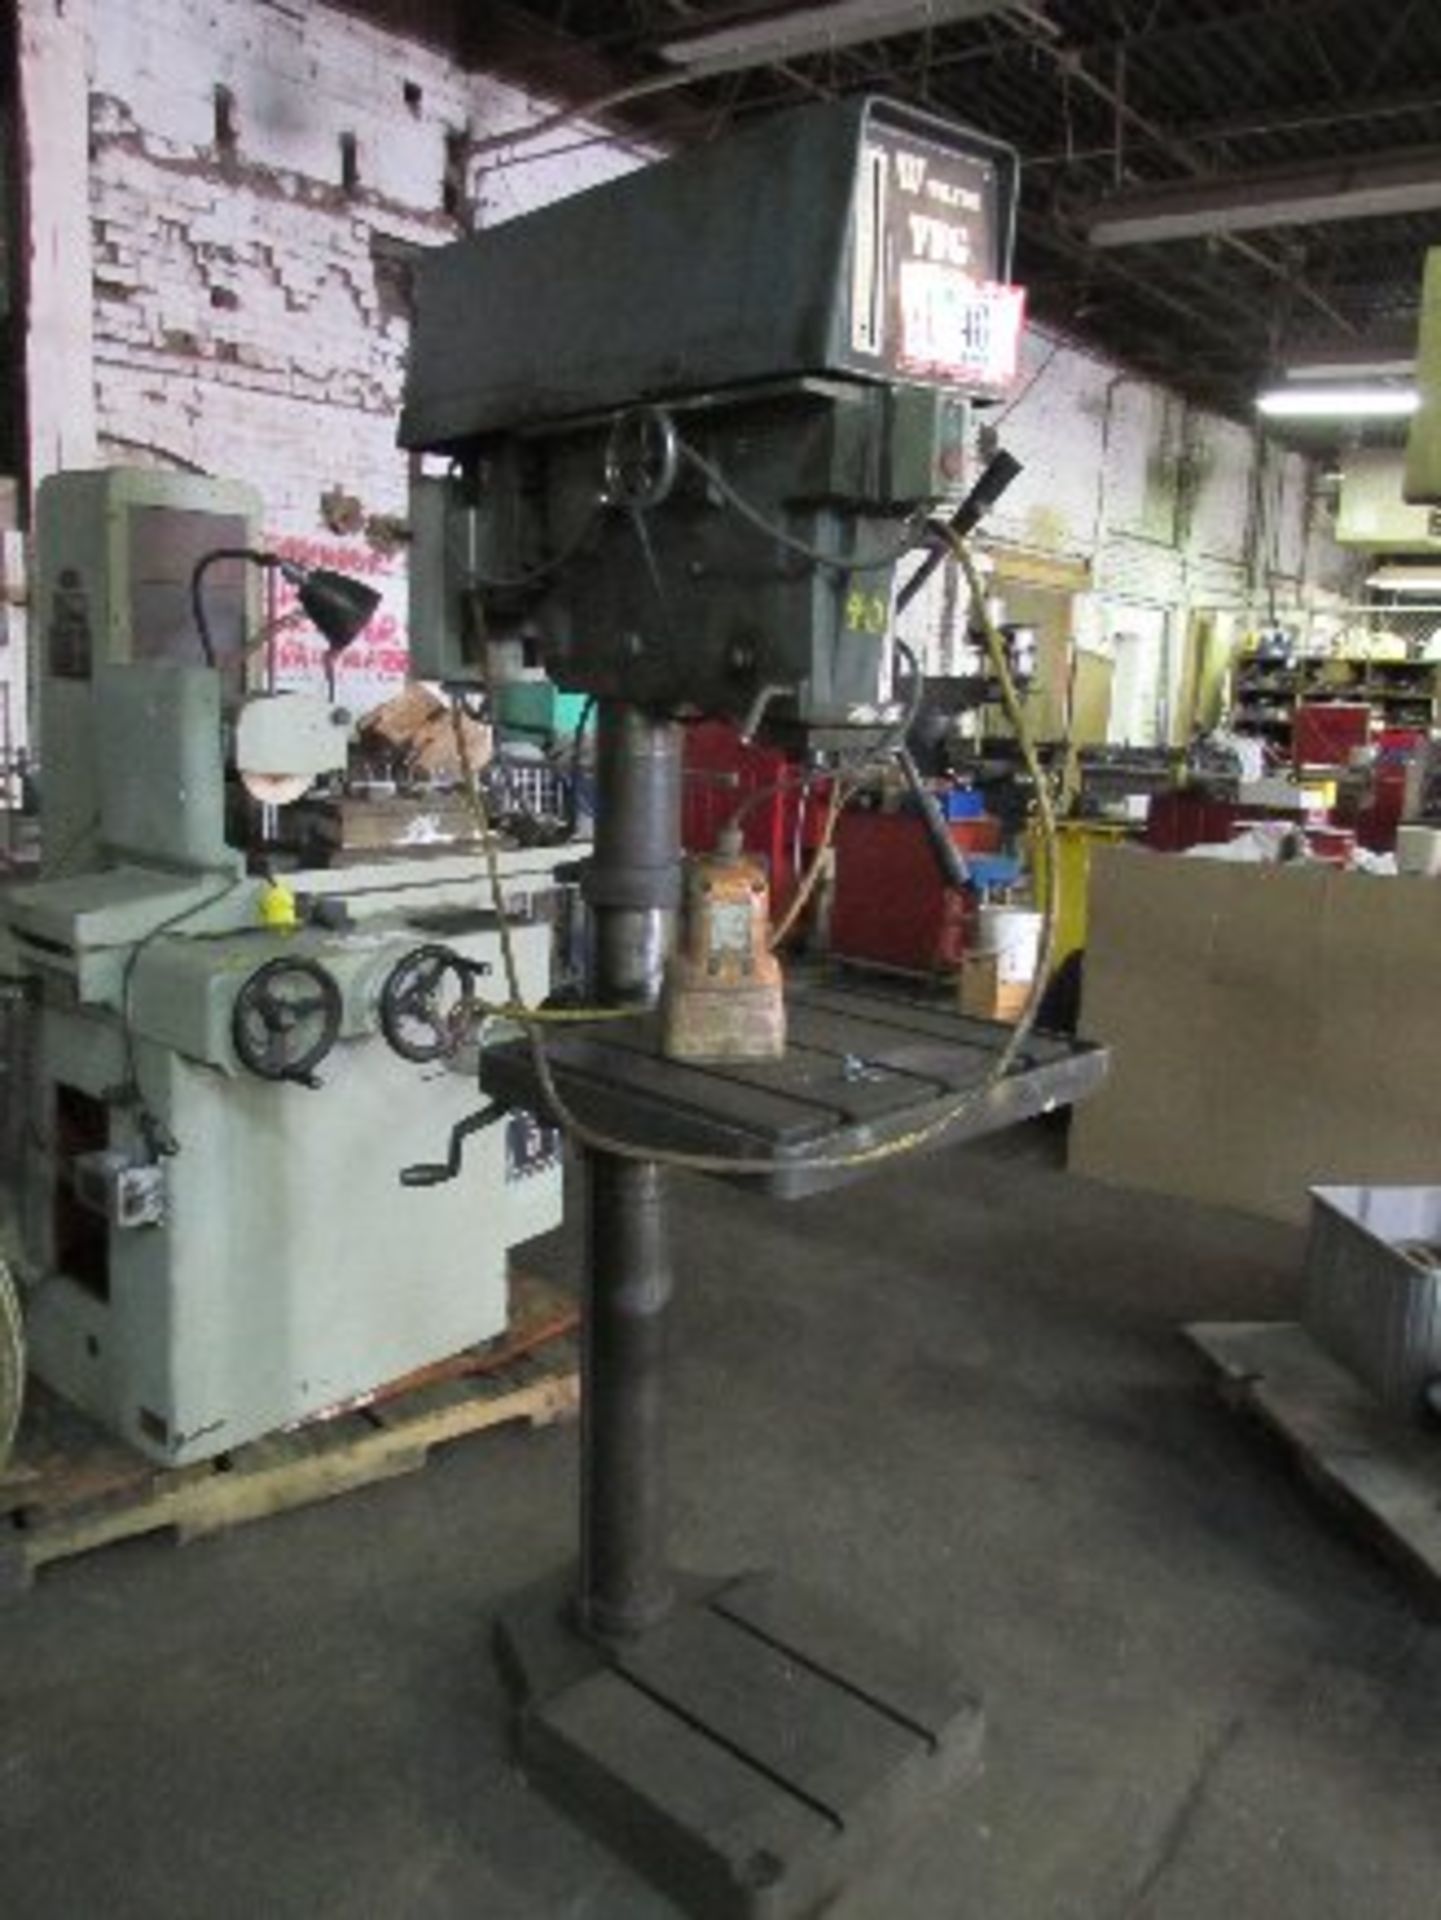 Wilton VSG20 20" Vertical Drill Press, S/N 502700